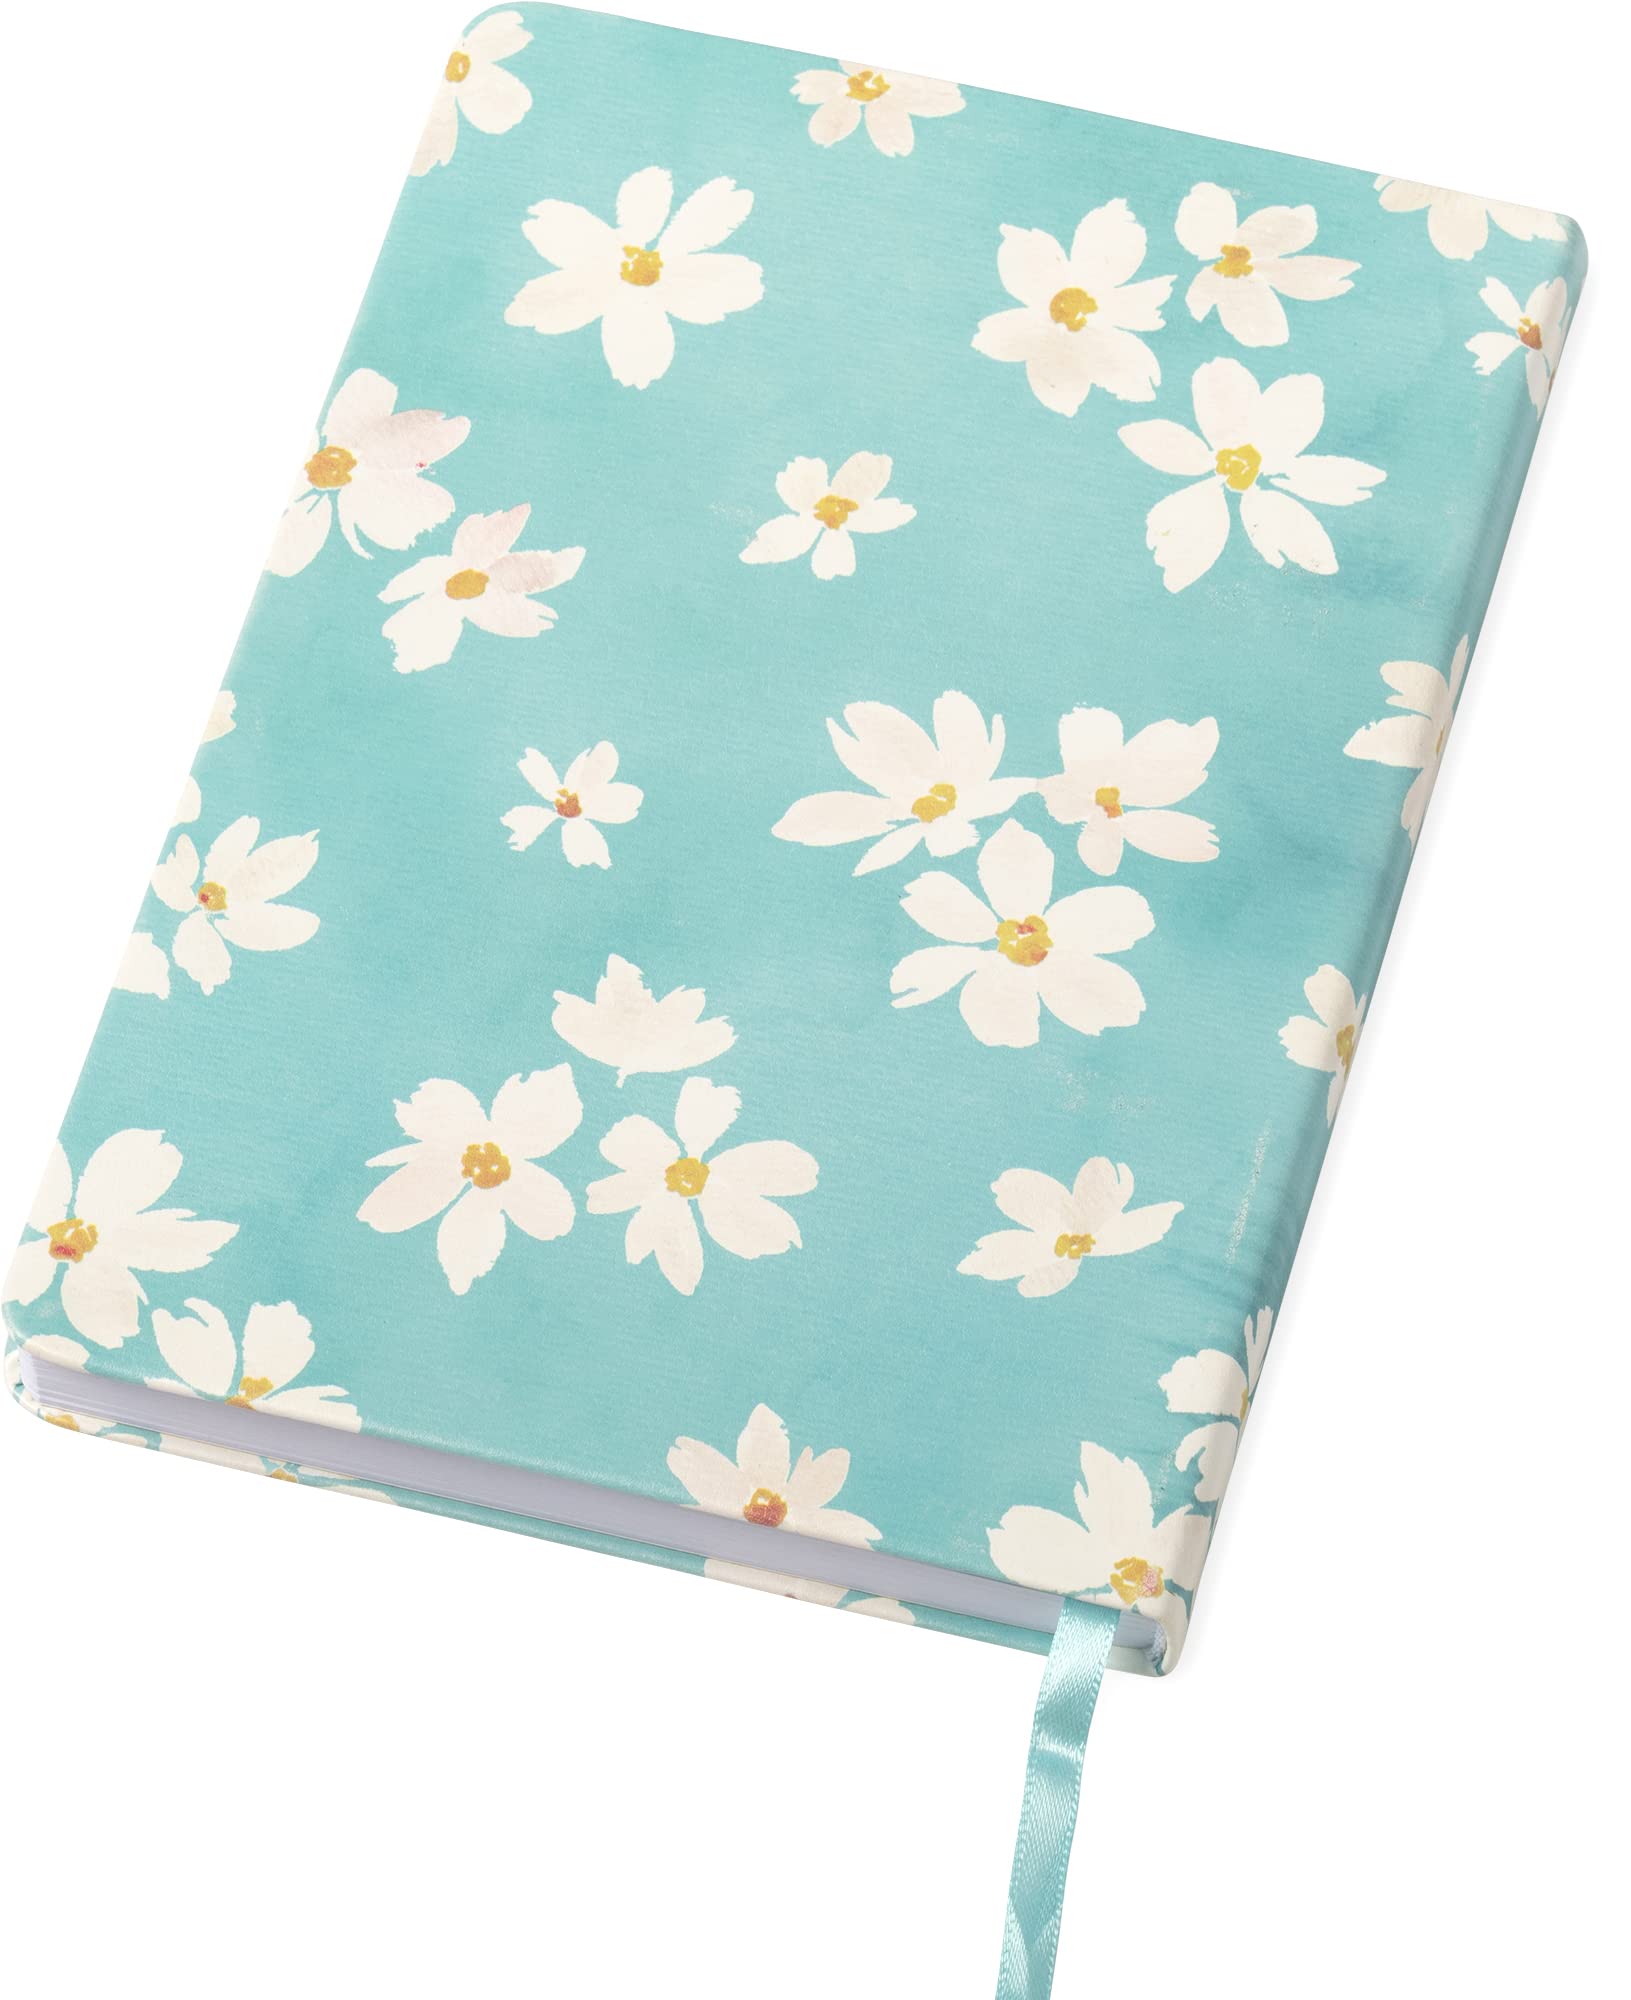 Daisy Notes Journal